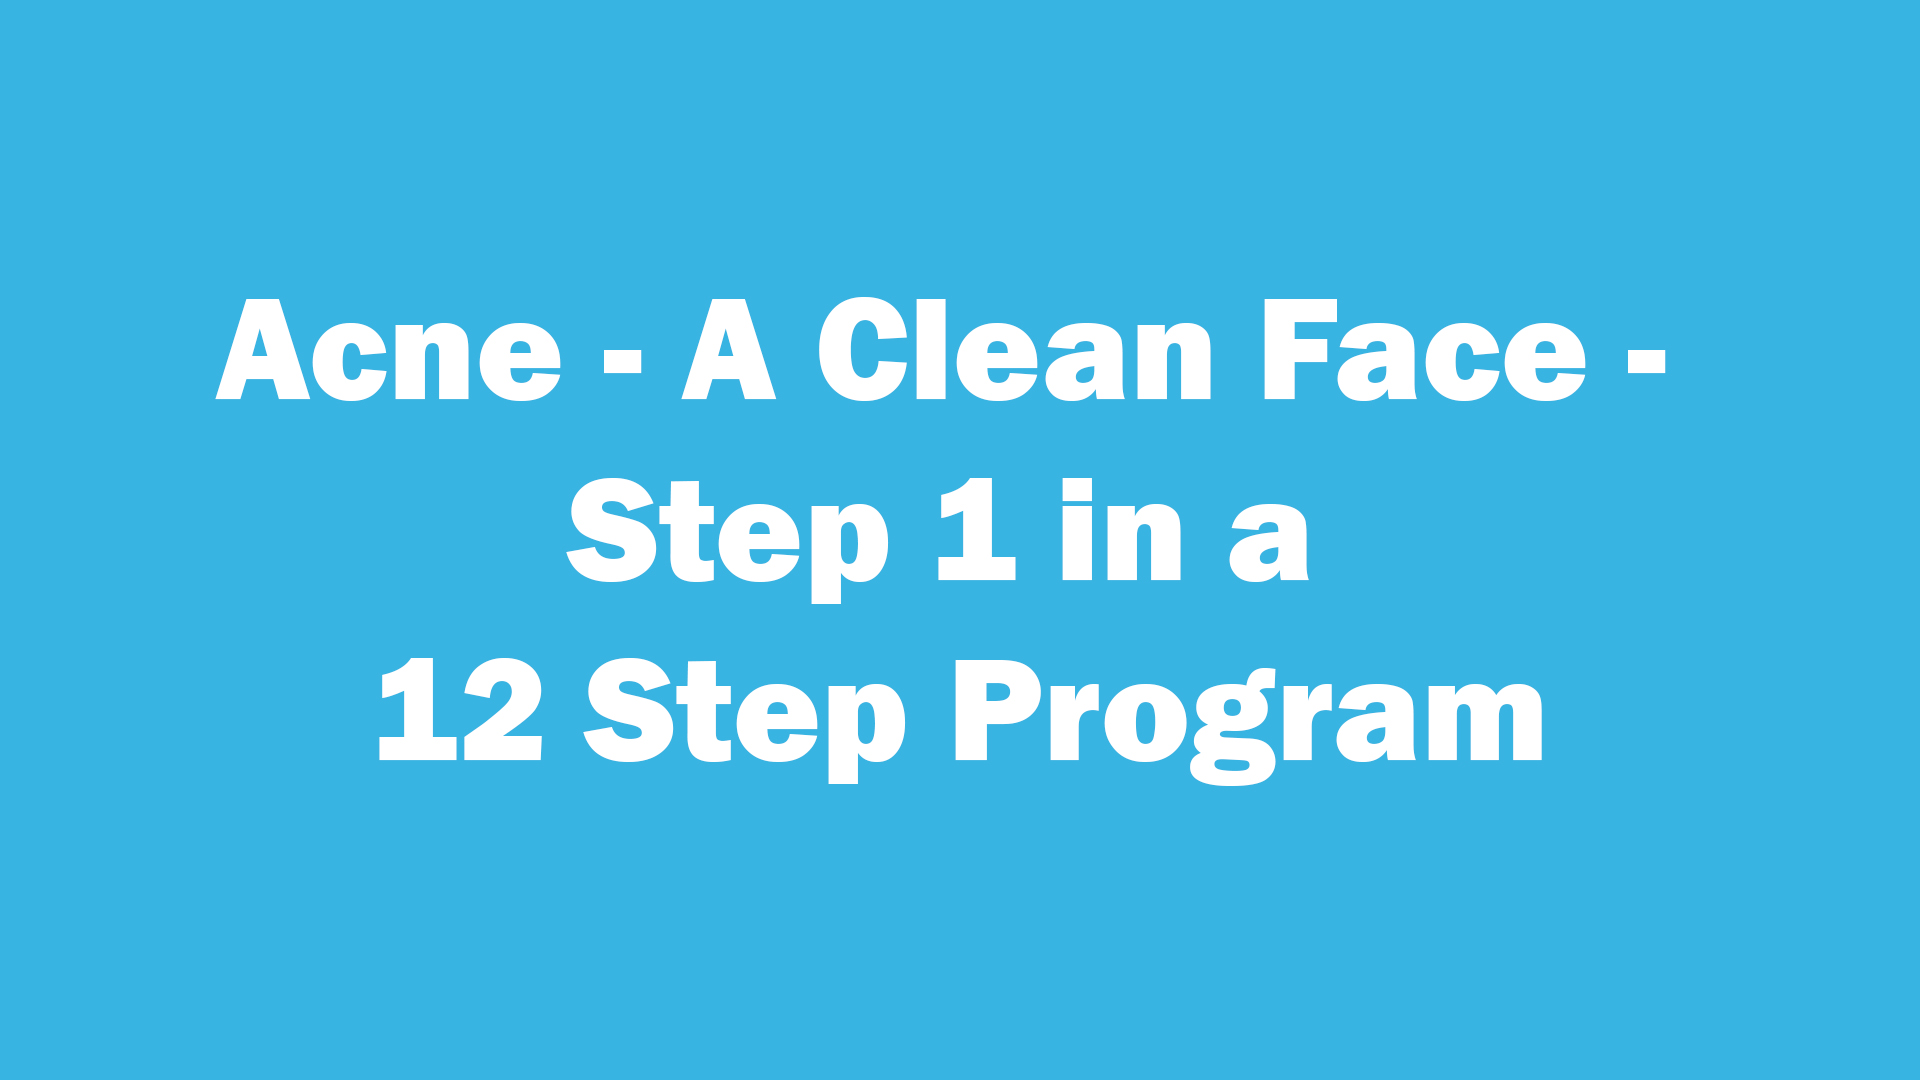 Acne - A Clean Face - Step 1 in a 12 Step Program